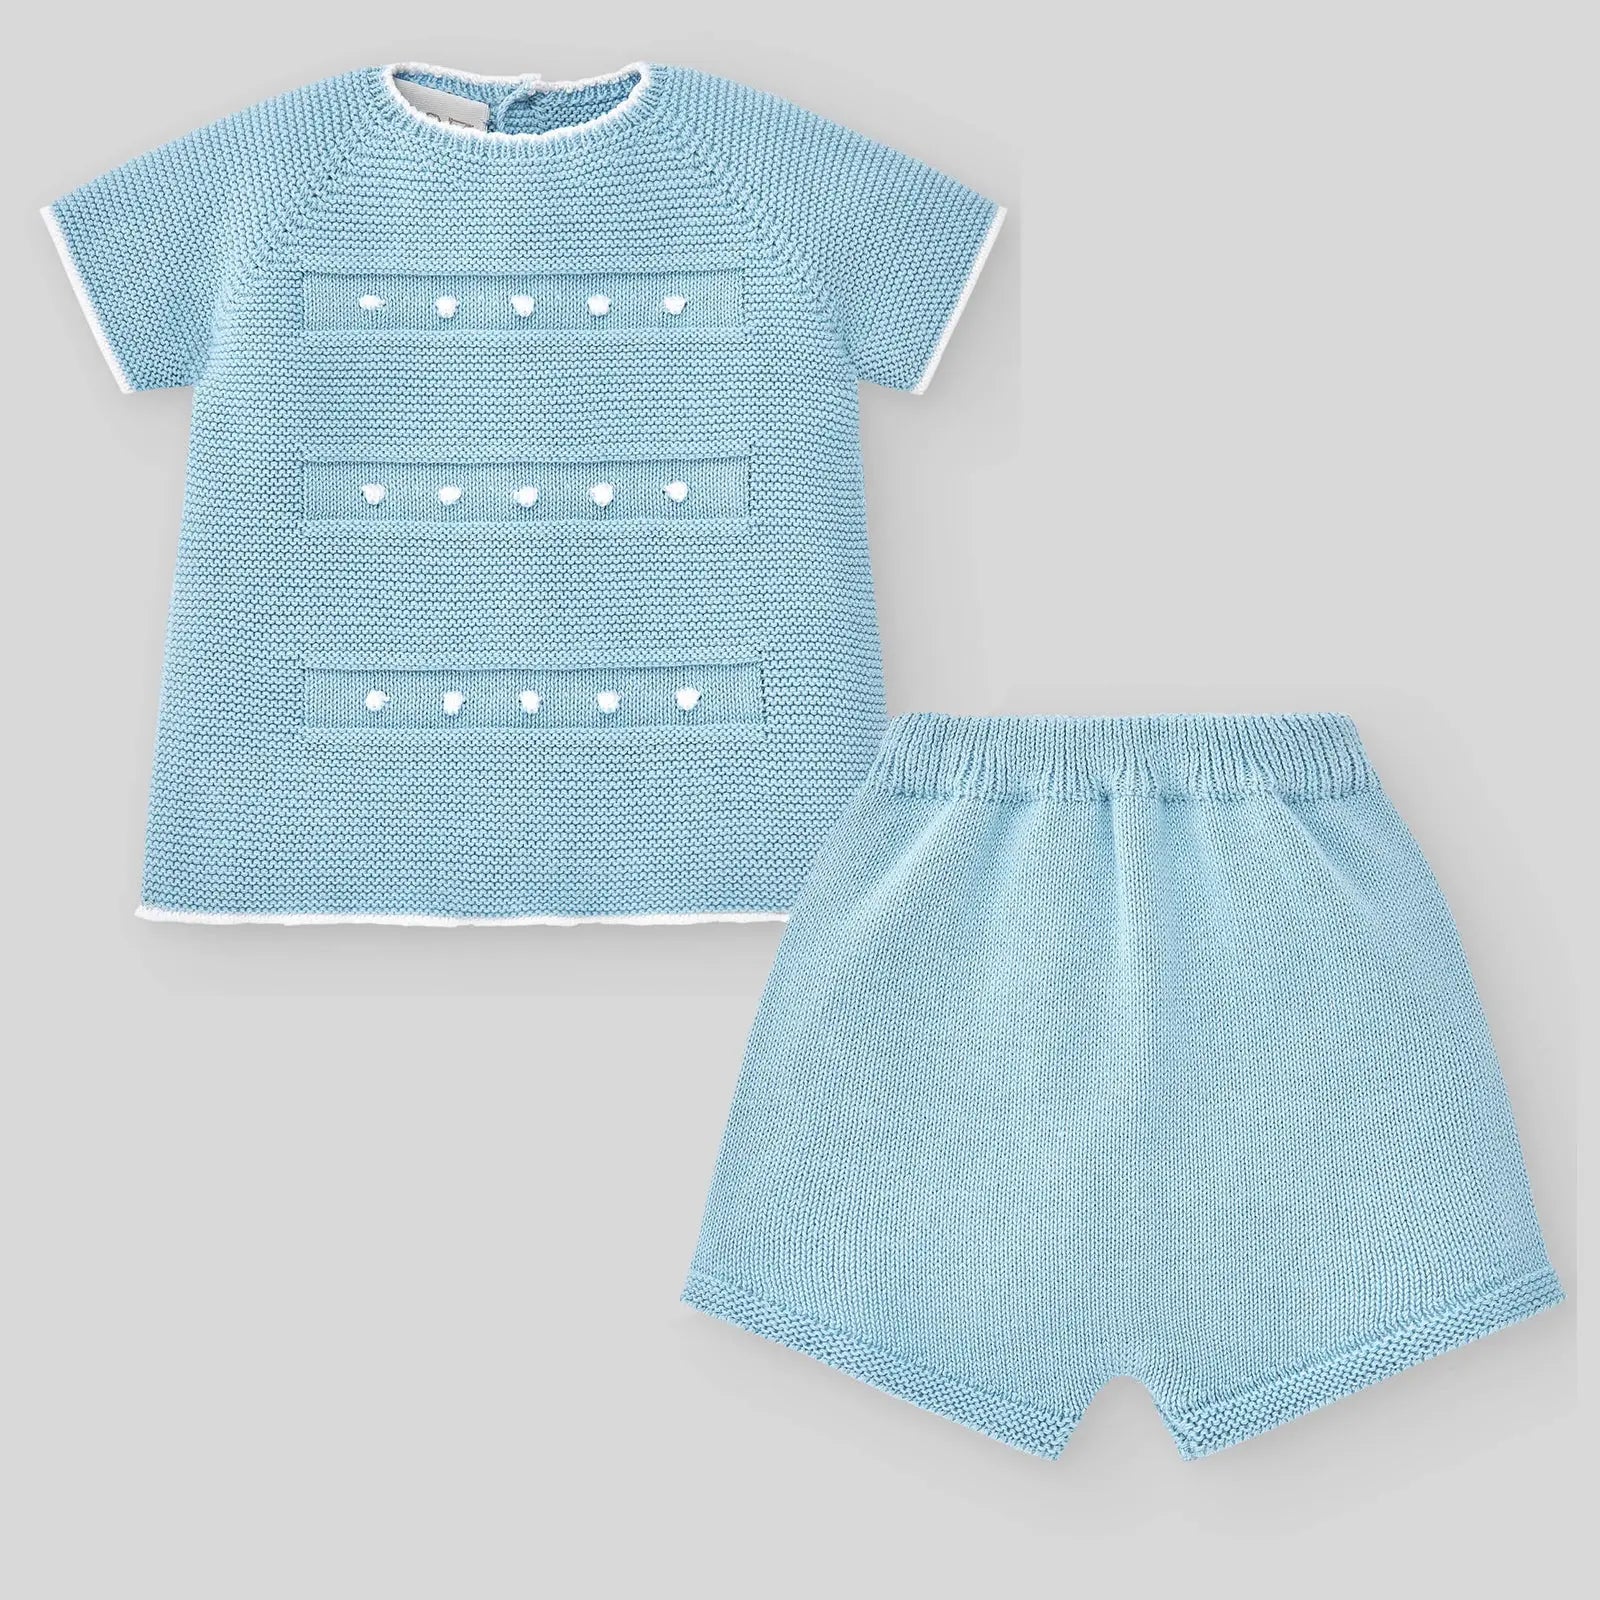 Blue Almonds Ltd Boy's Knitted Shorts Set in Aquamarine & White paz rodriguez